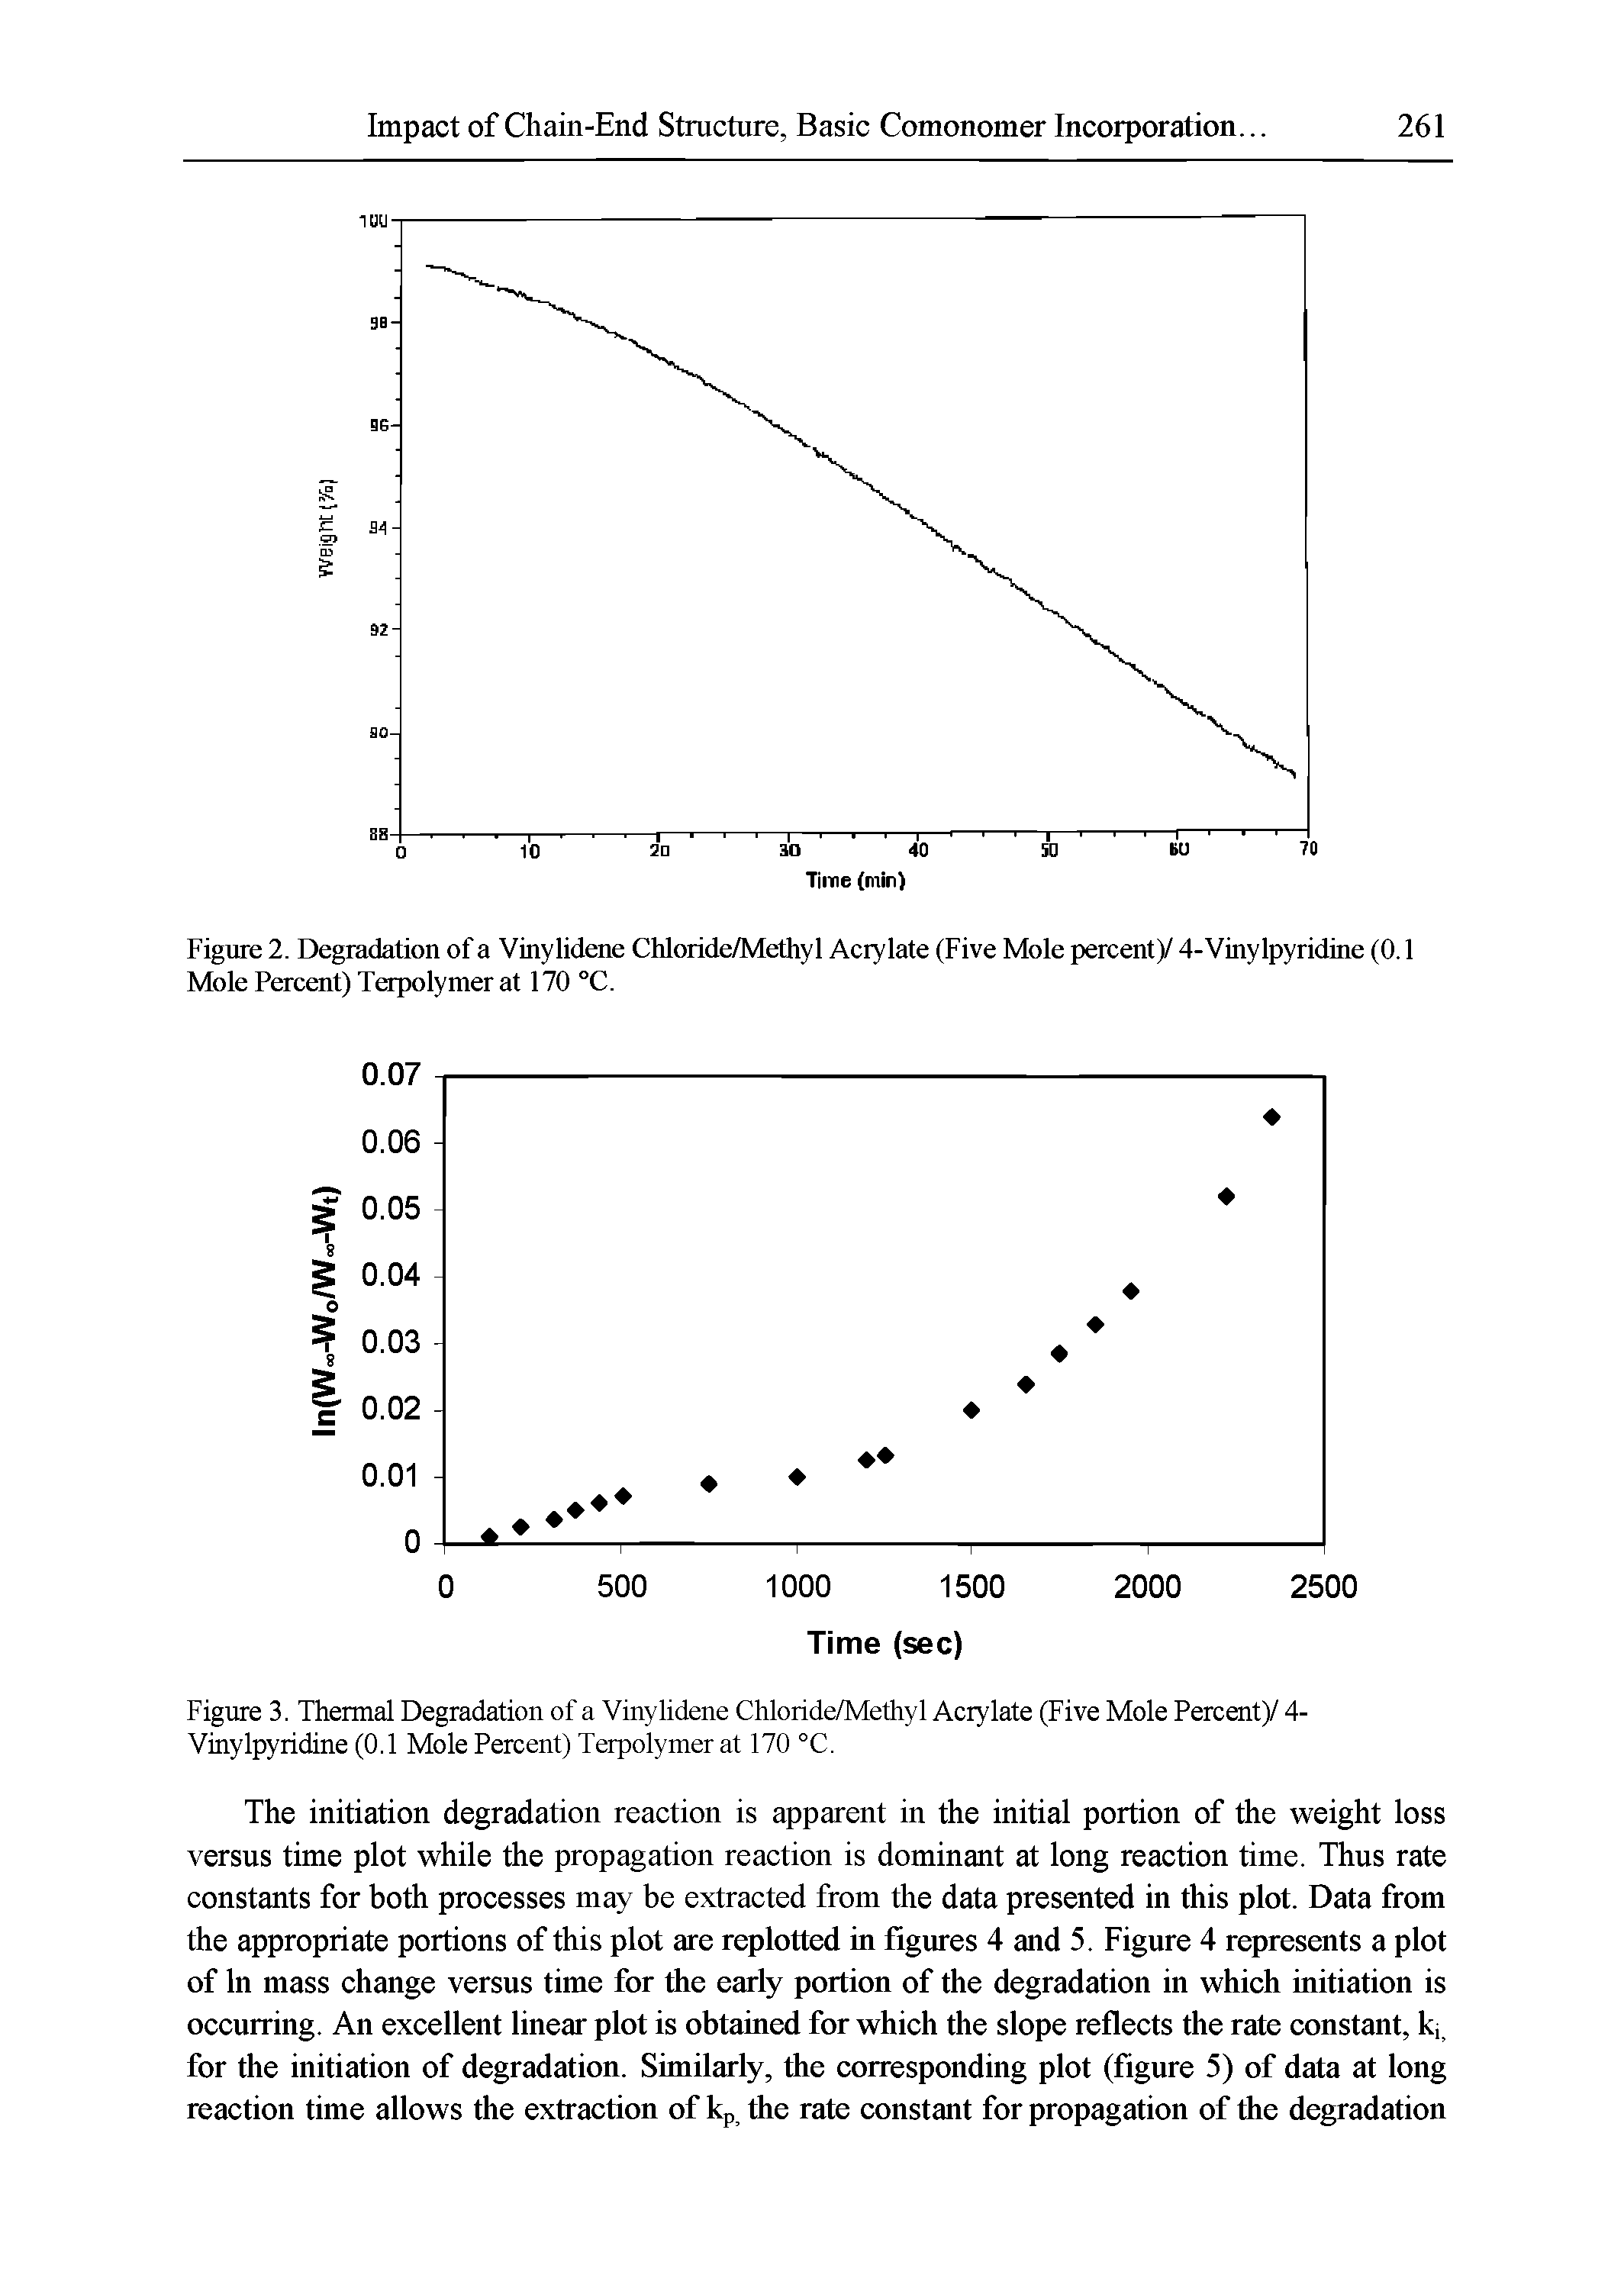 Figure 2. Degradation of a Vinylidene Chloride/Methyl Acrylate (Five Mole percent)/ 4-Vinylpyridine (0.1 Mole Percent) Terpolymer at 170 °C.